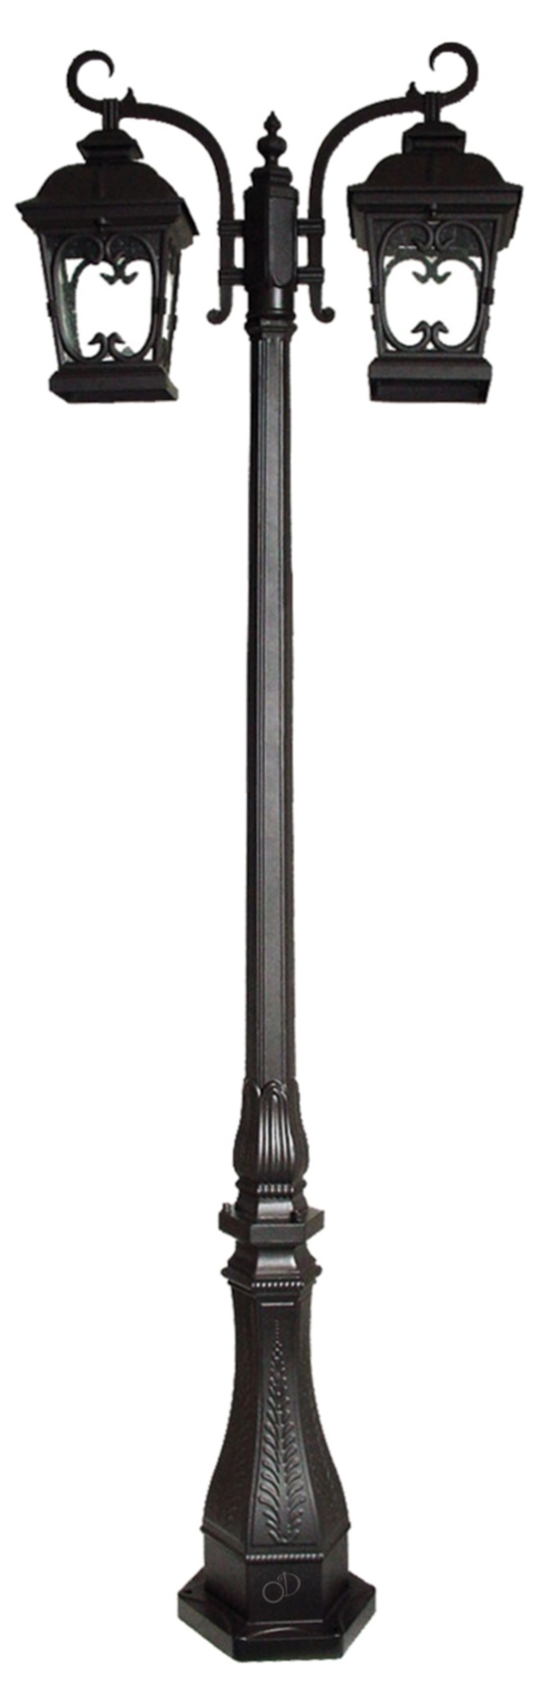 2-light Outdoor Lamp post | Classic Design